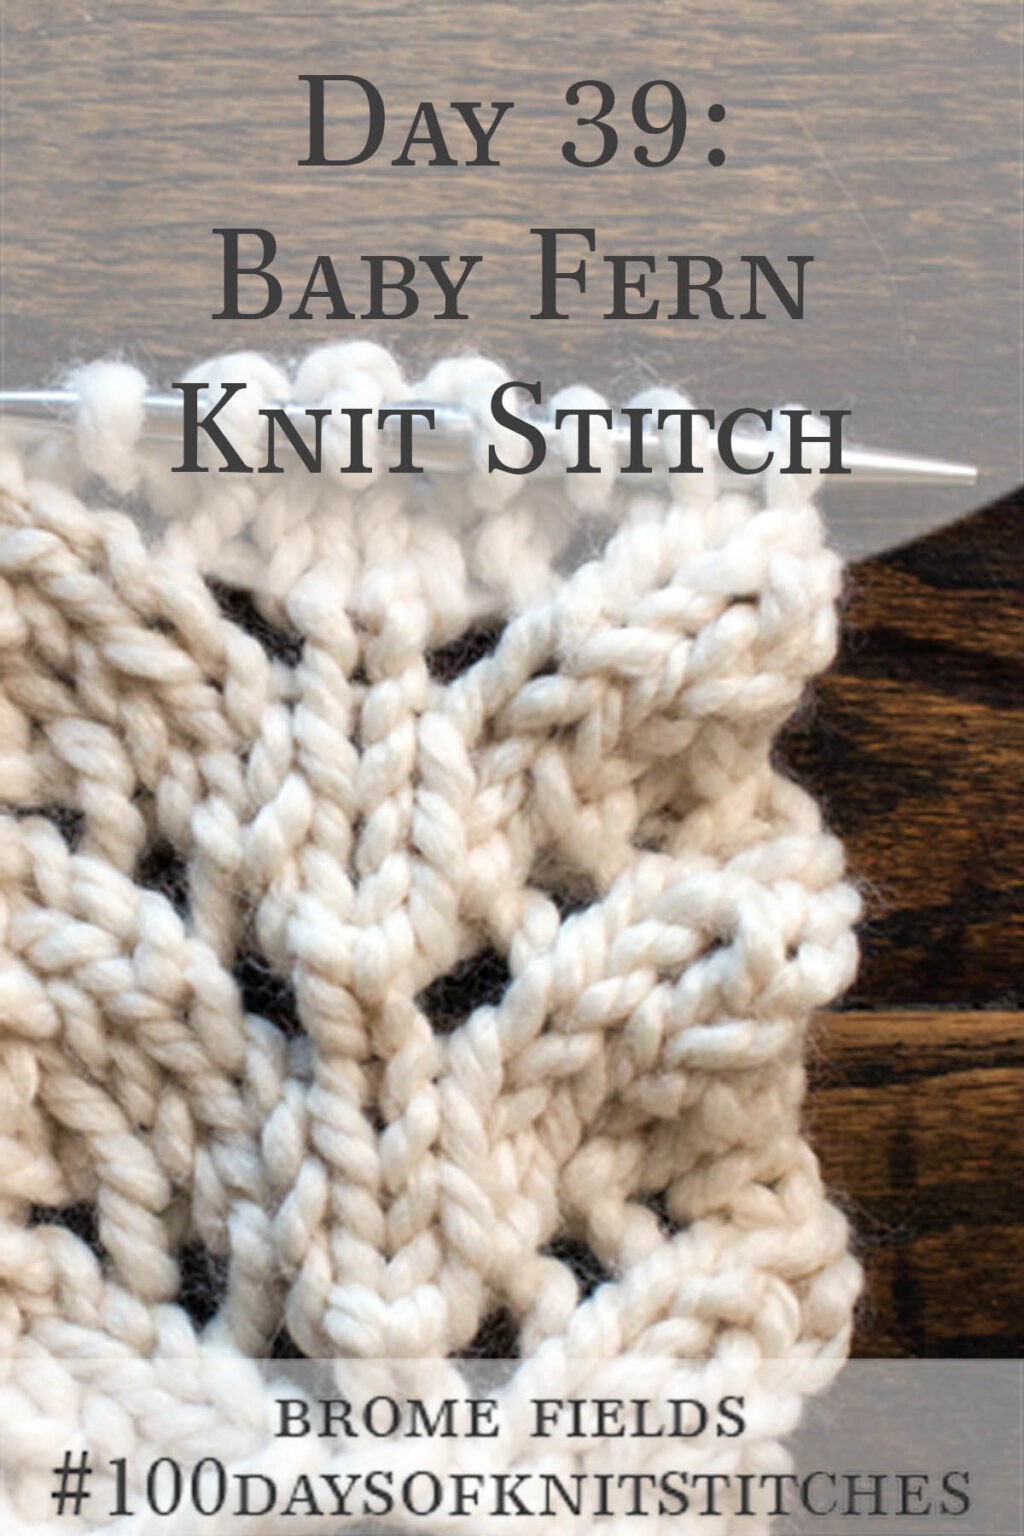 Baby Fern Knitting Stitch Pattern : Brome Fields